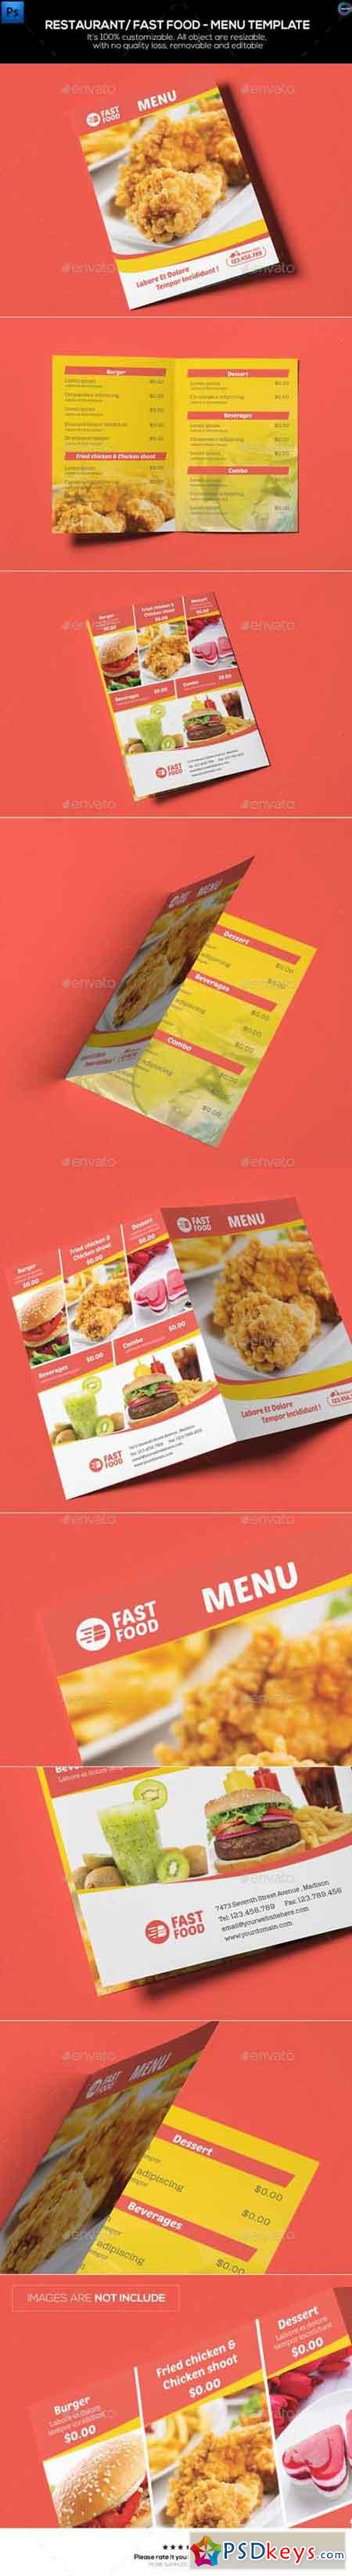 Restaurant Fast Food - Menu Template 12348395